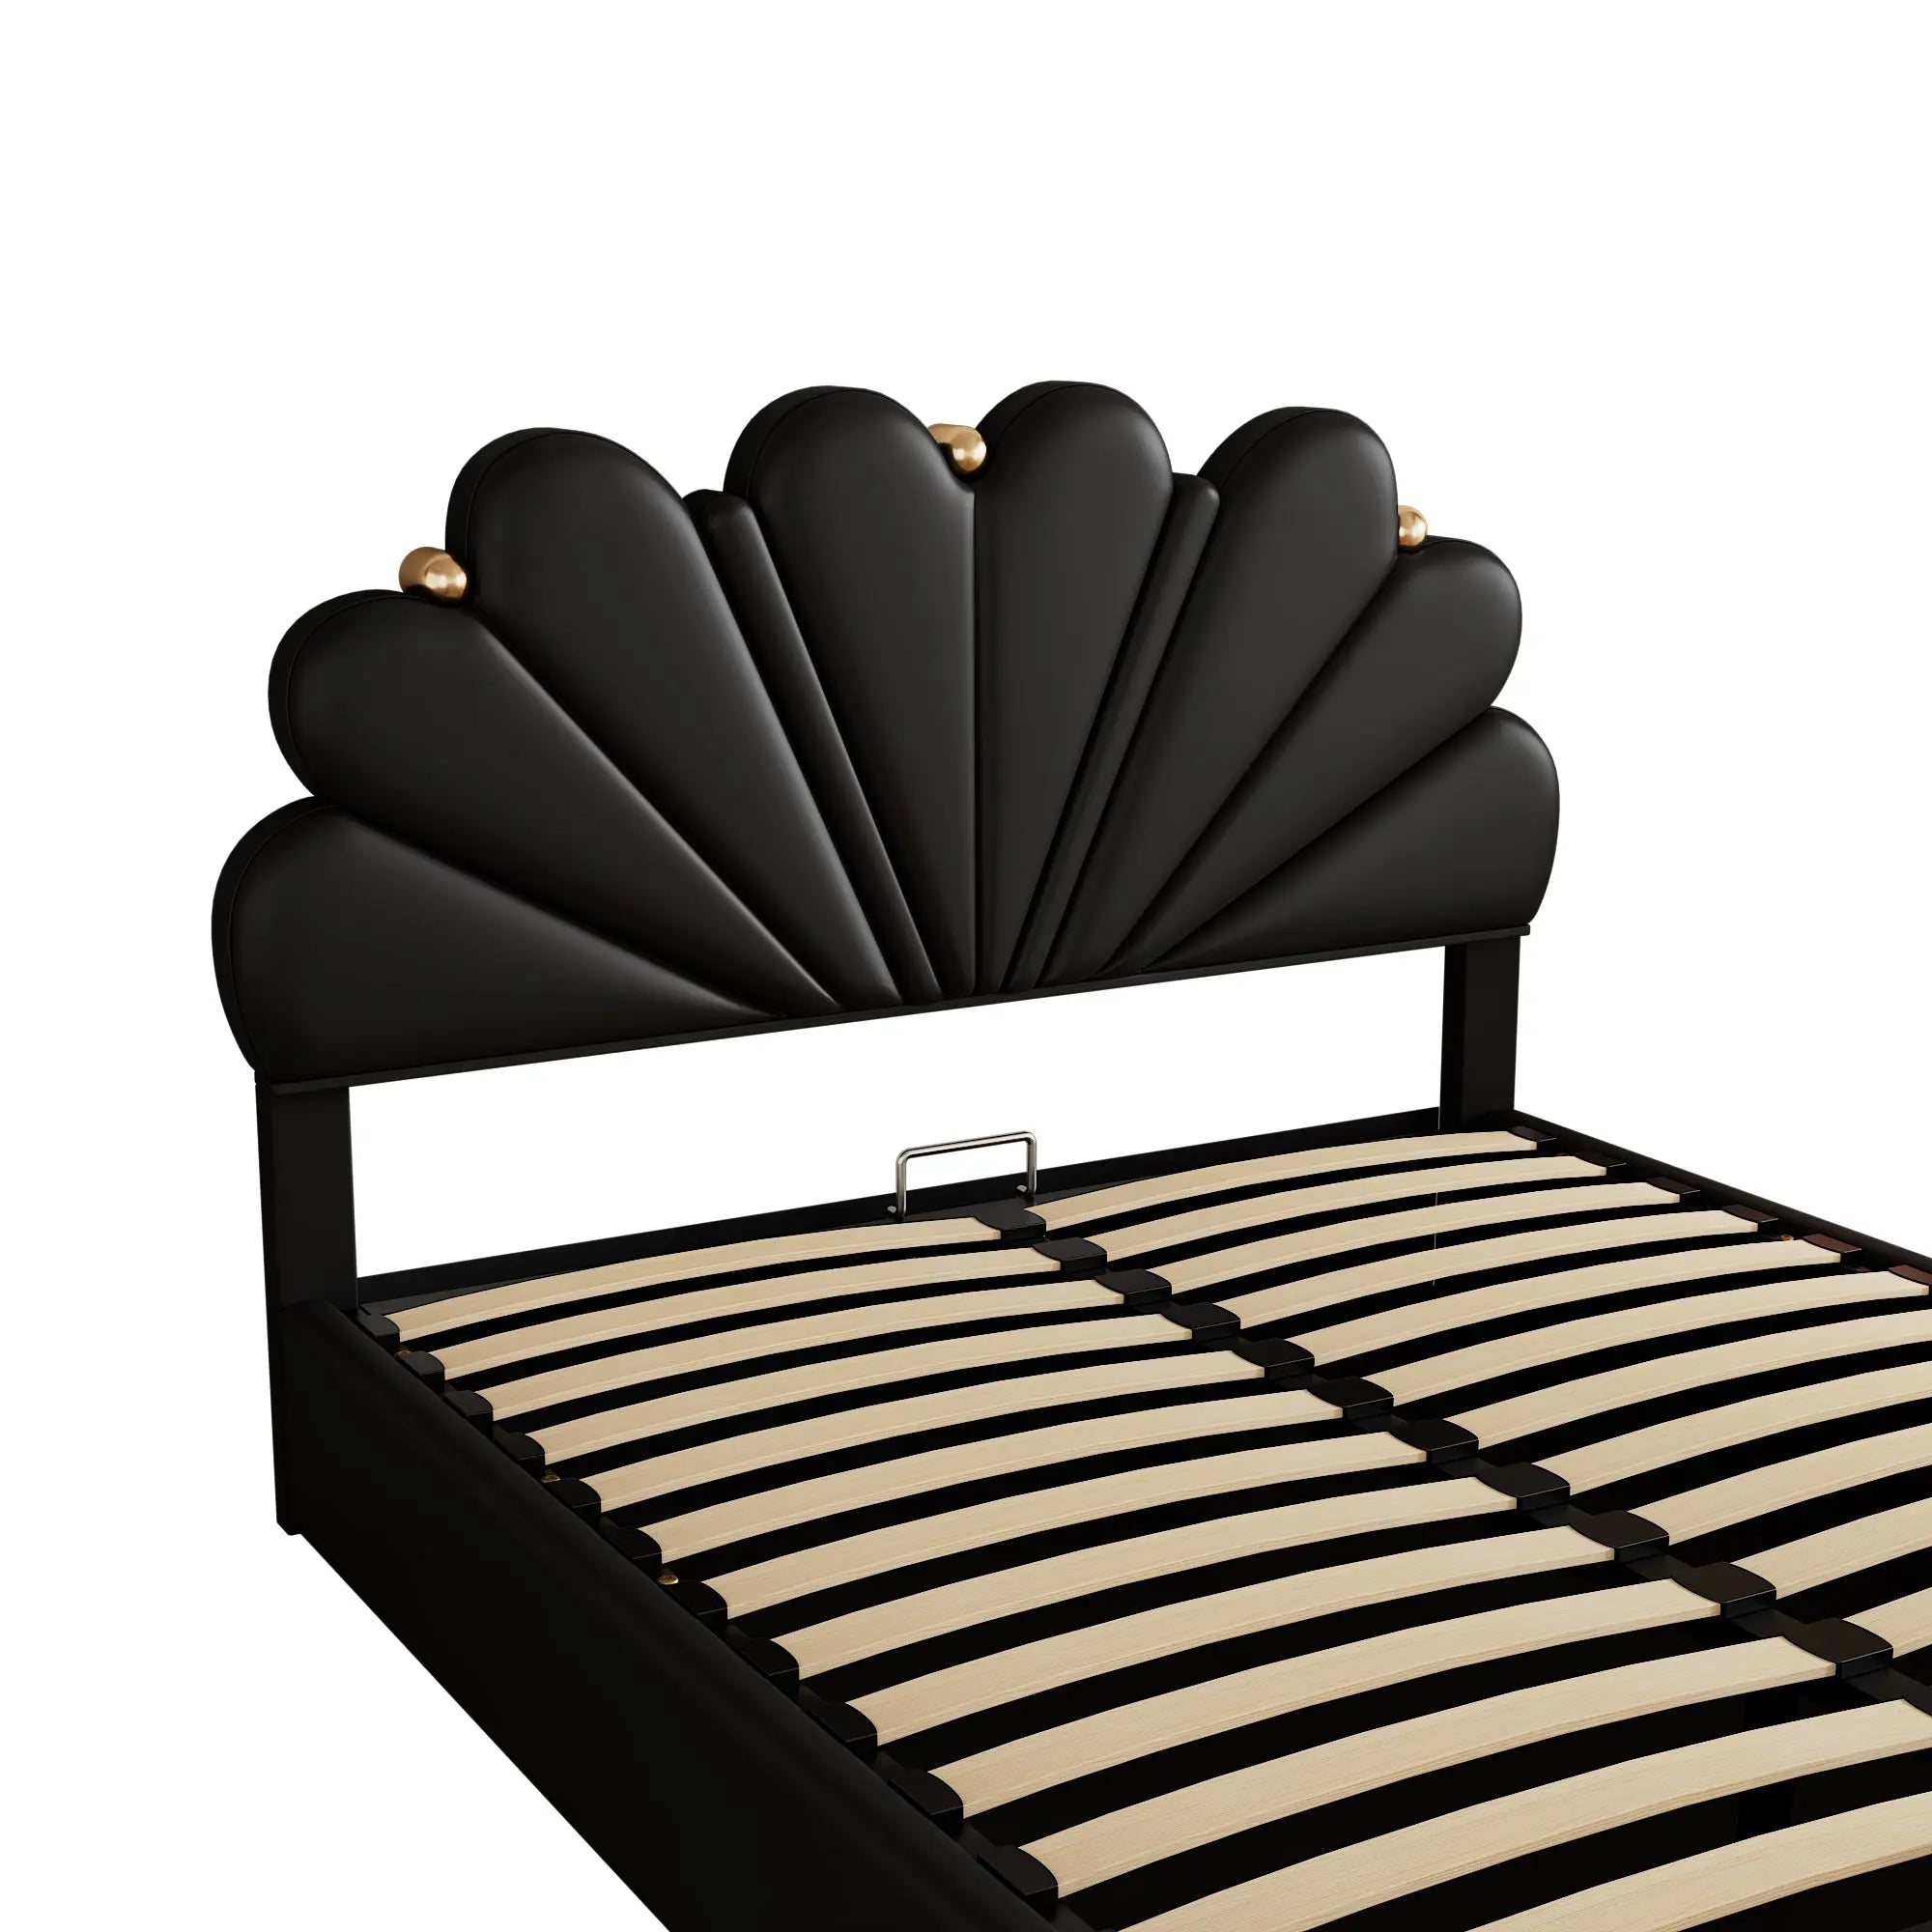 Bellemave® Queen Size Upholstered Petal Shaped Platform Bed with Hydraulic Storage System Bellemave®